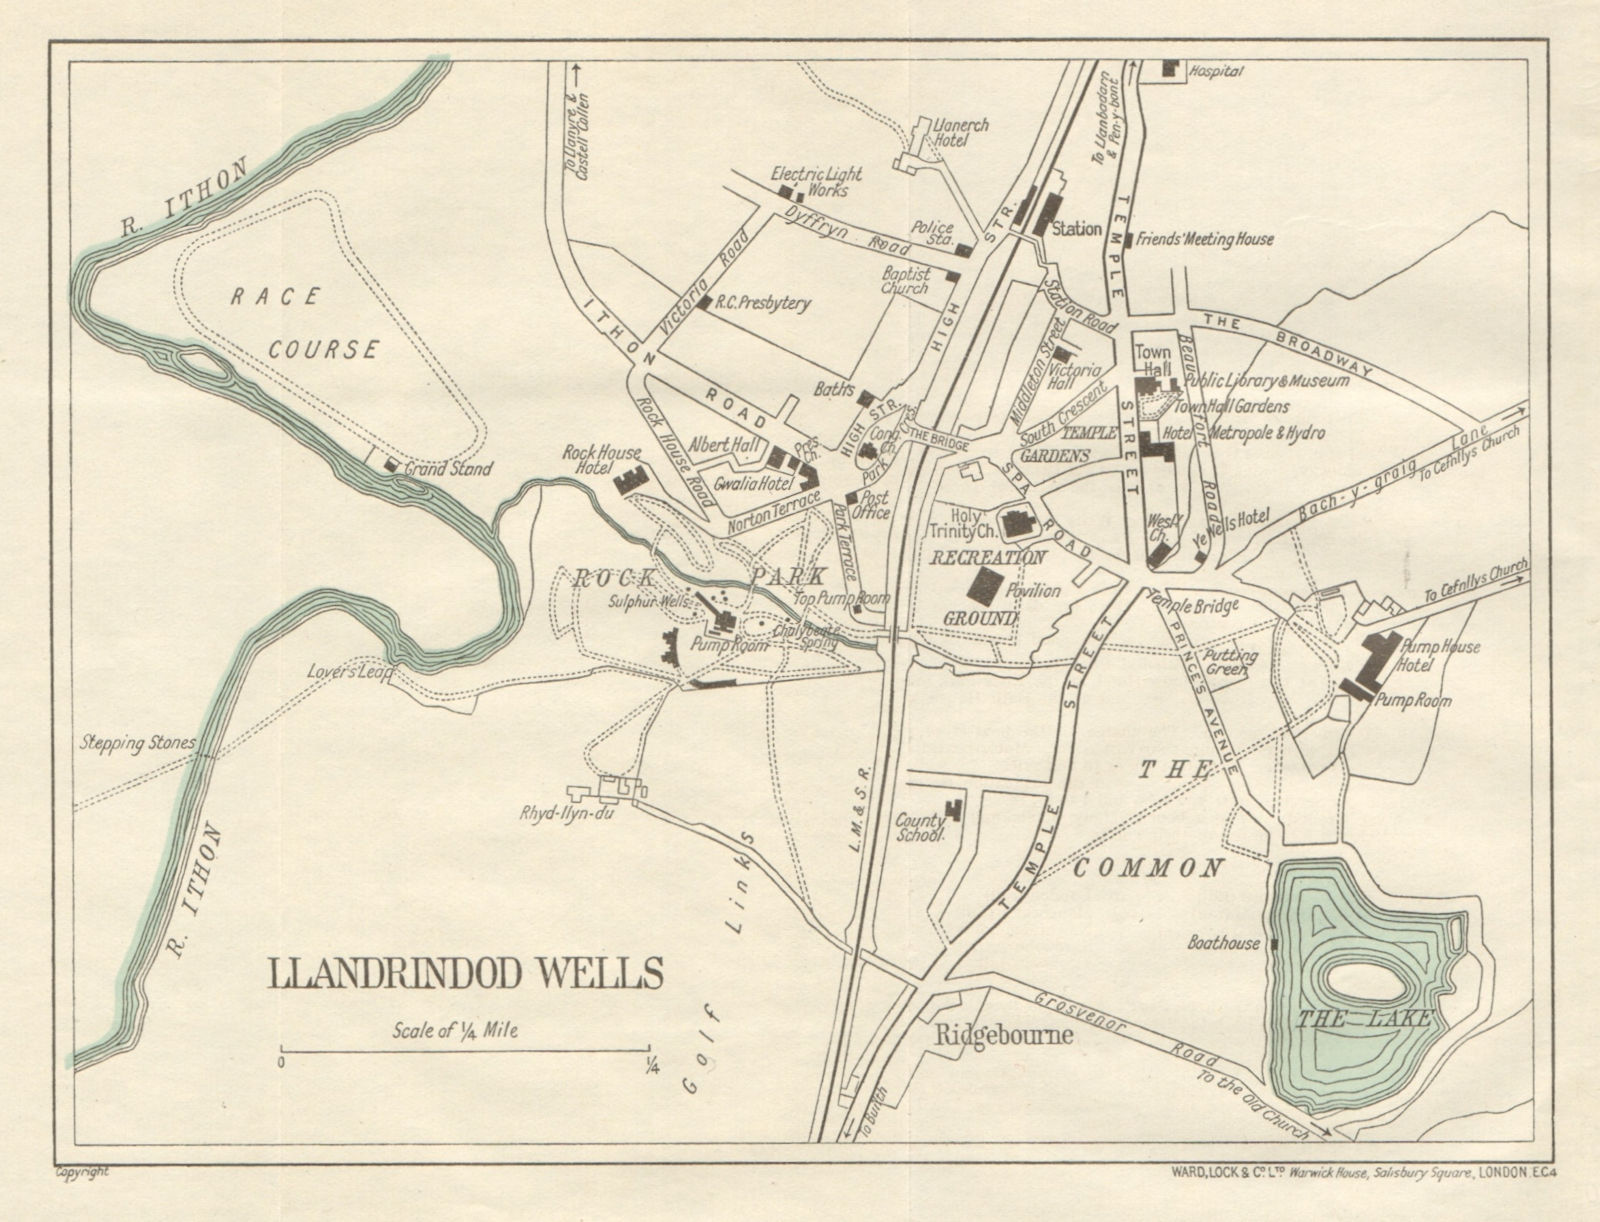 LLANDRINDOD WELLS vintage tourist town city plan. Wales. WARD LOCK 1939 map